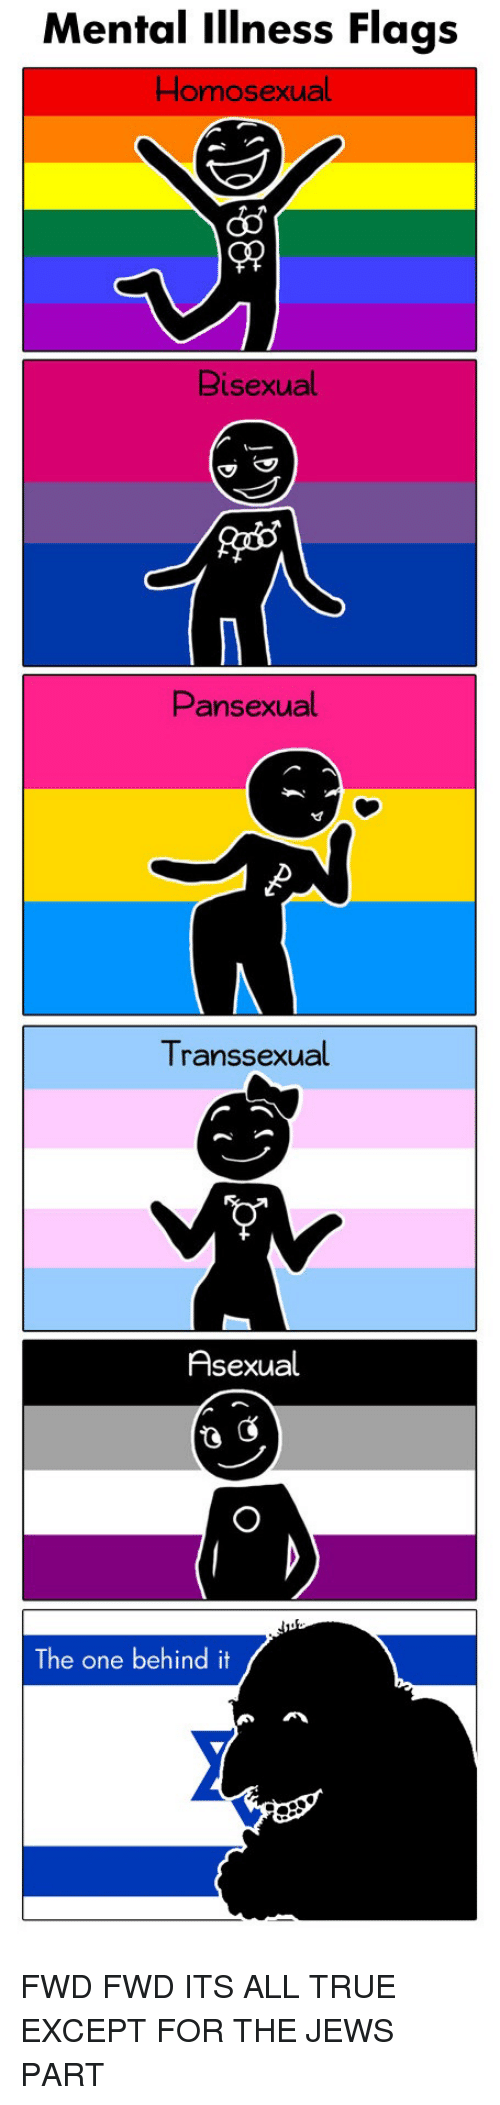 Bisexual mentall illness